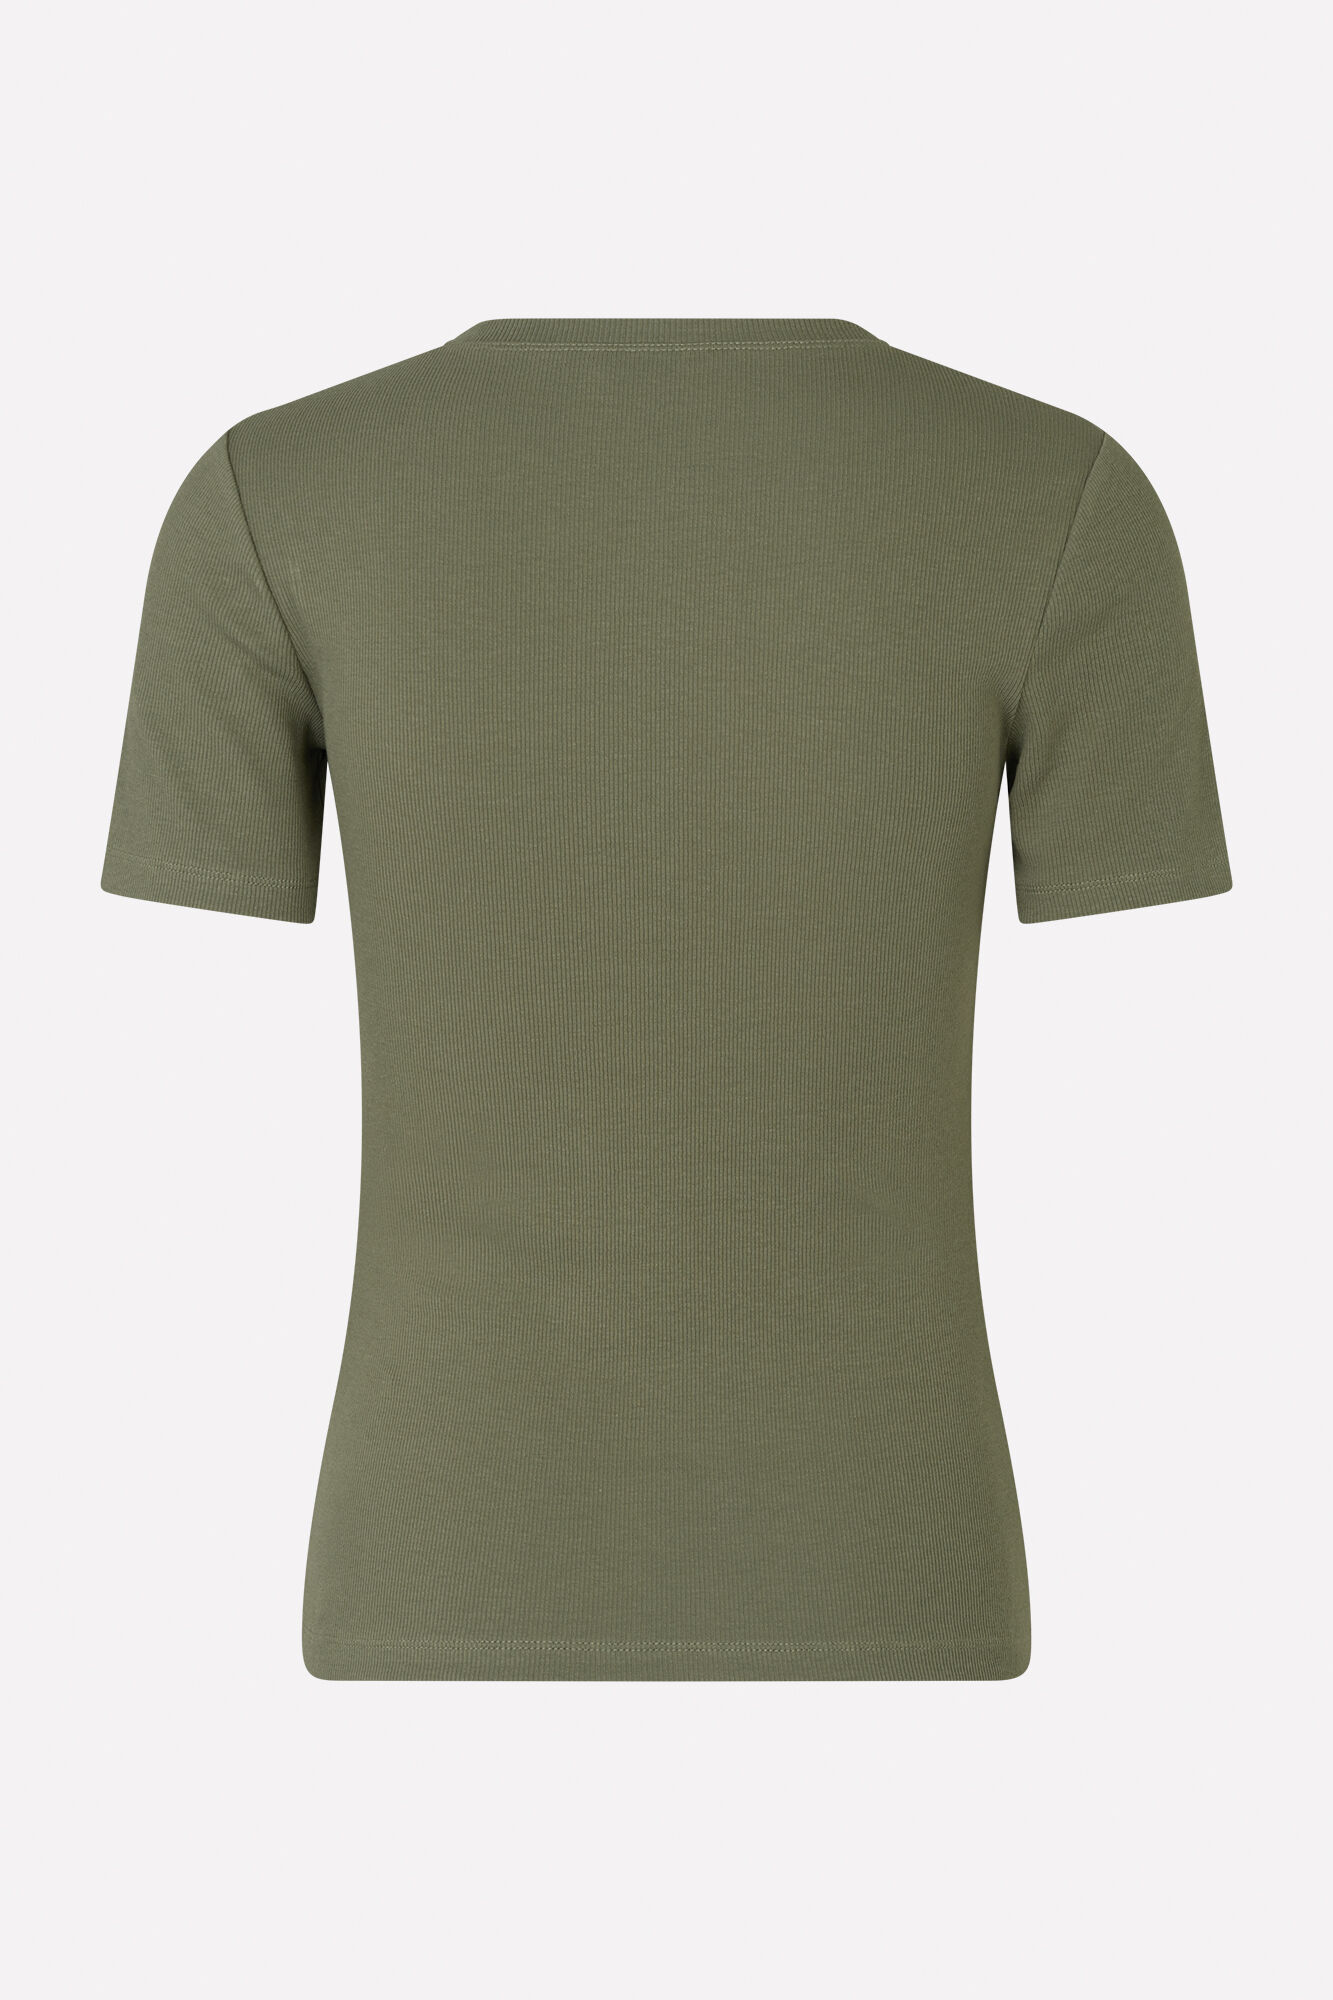 T-shirts & Tops for Women - Shop online | Envii